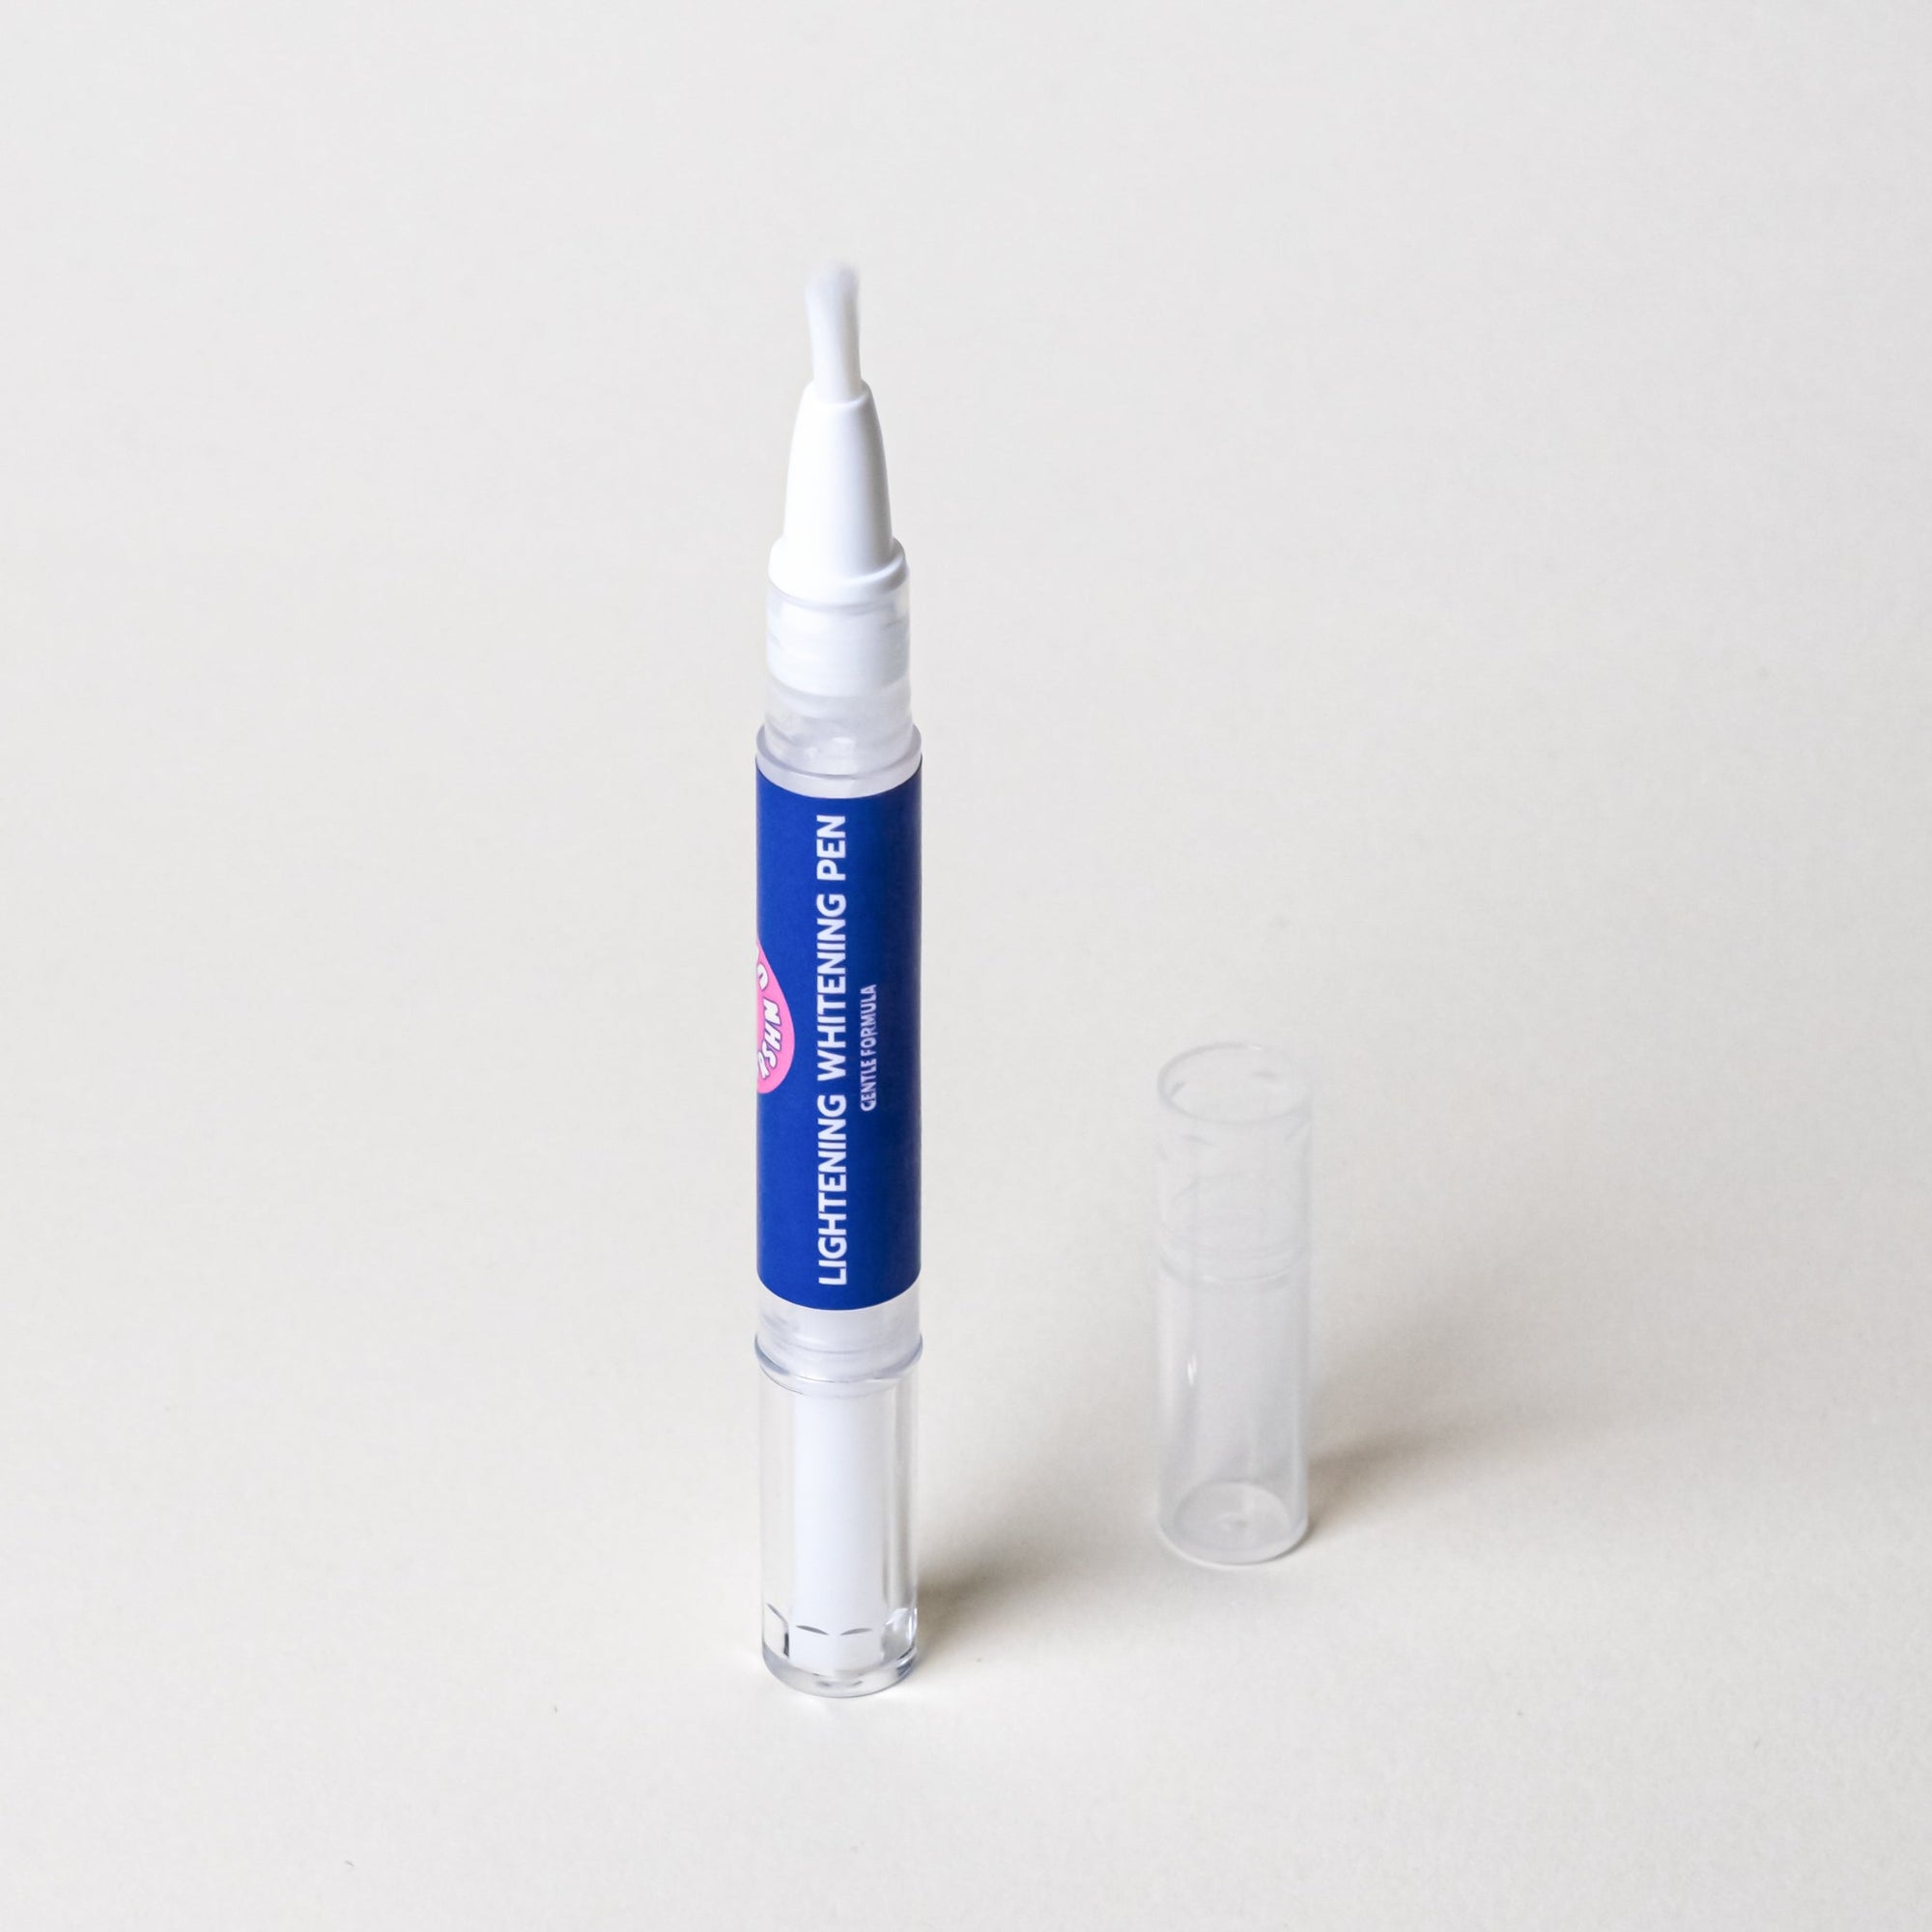 A FRSHN UP Lightening Whitening Pen - Gentle Formula gel applicator pen for sensitive teeth.